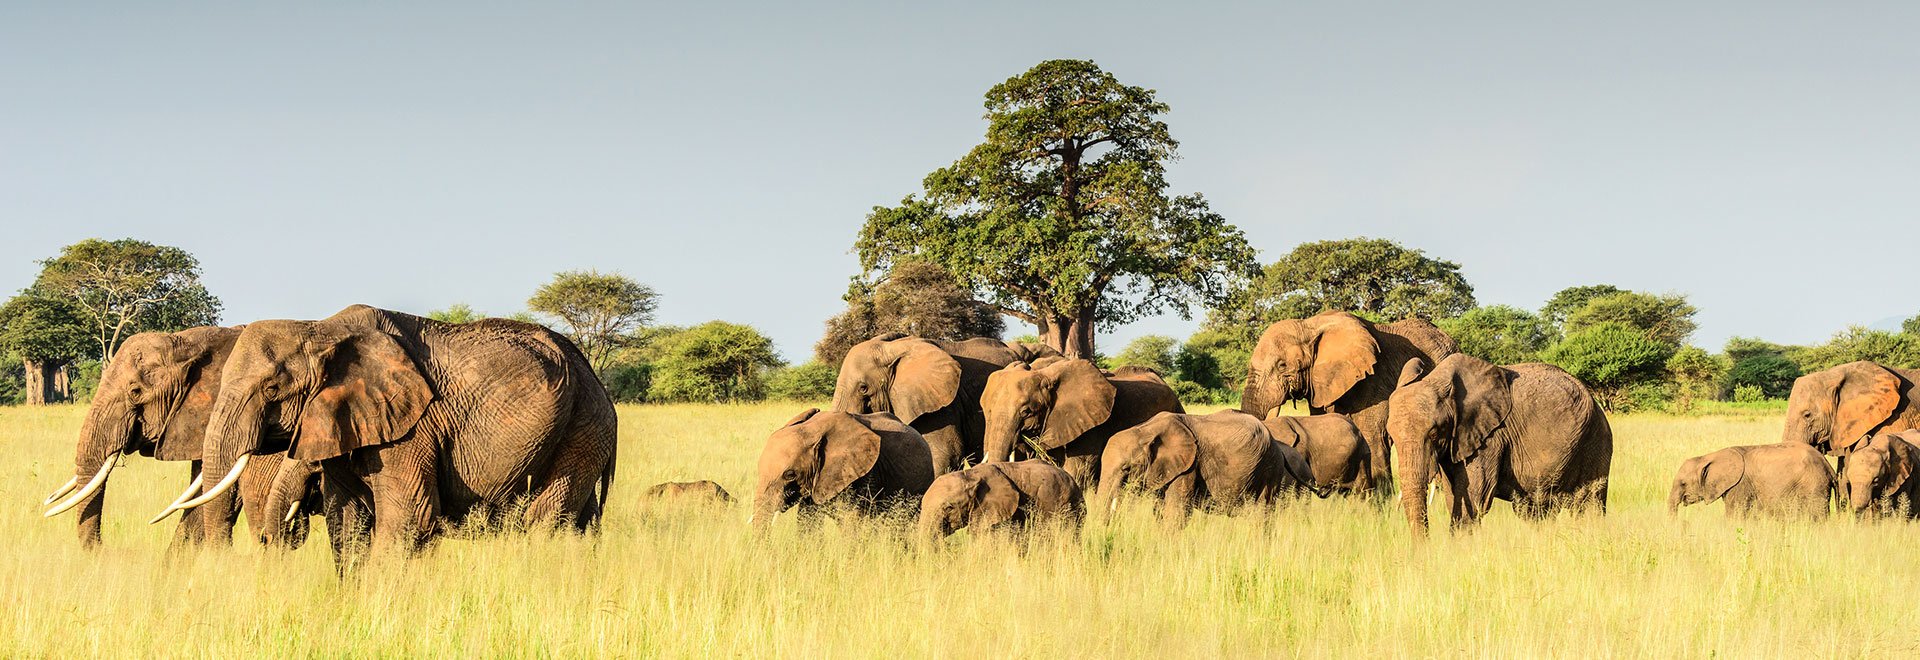 Tanzania SIS Tarangire National Park Elephants 